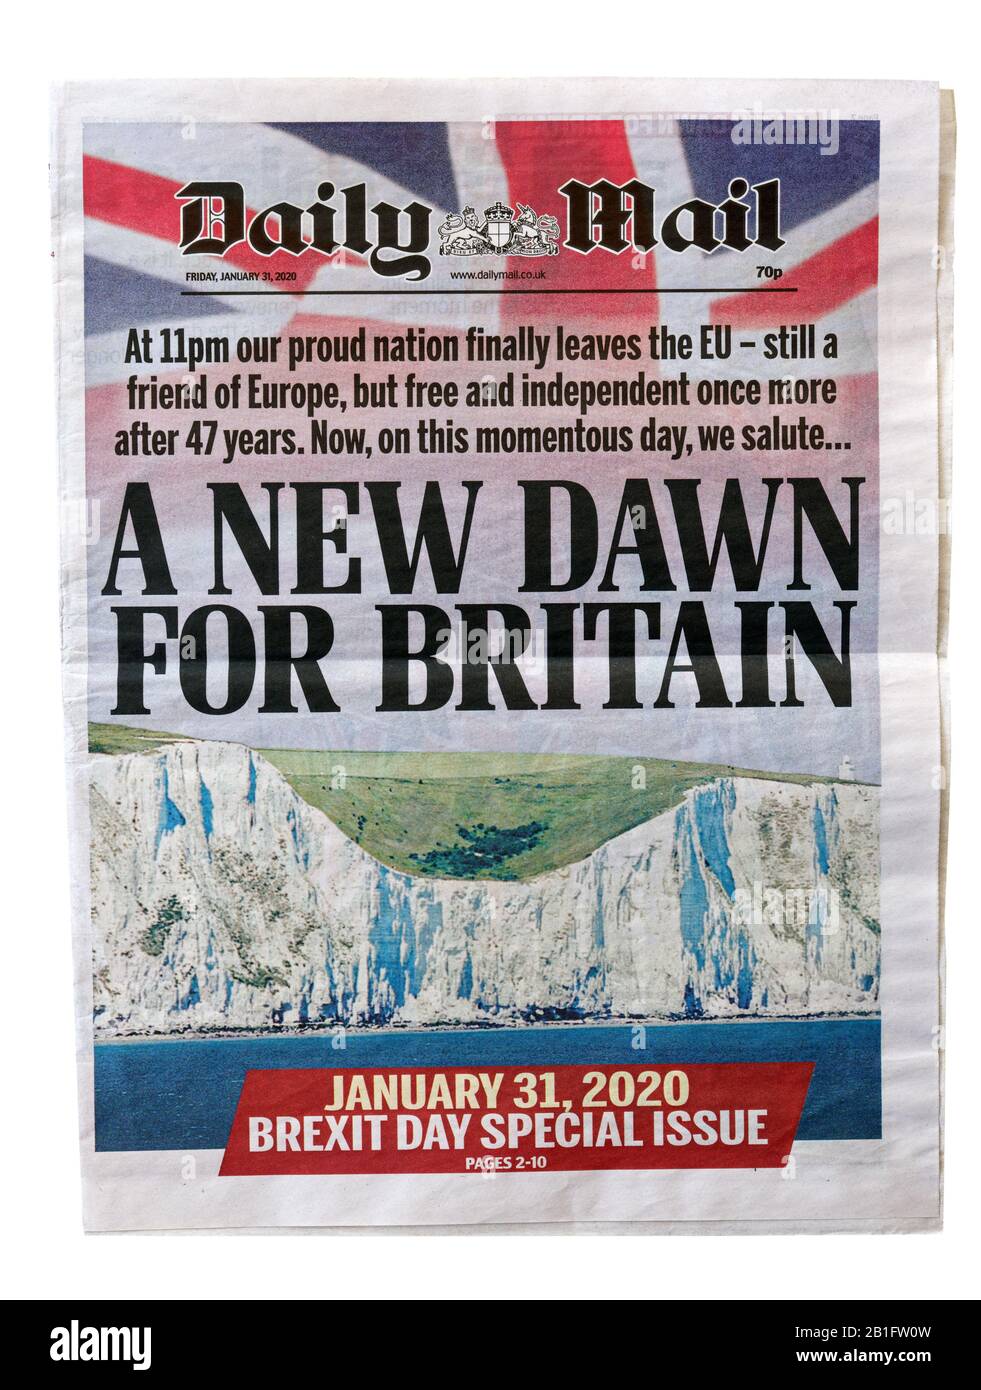 The Daily Mail vom 31. Januar 2020 mit der Brexit Headline "A New Dawn For Britain" Stockfoto